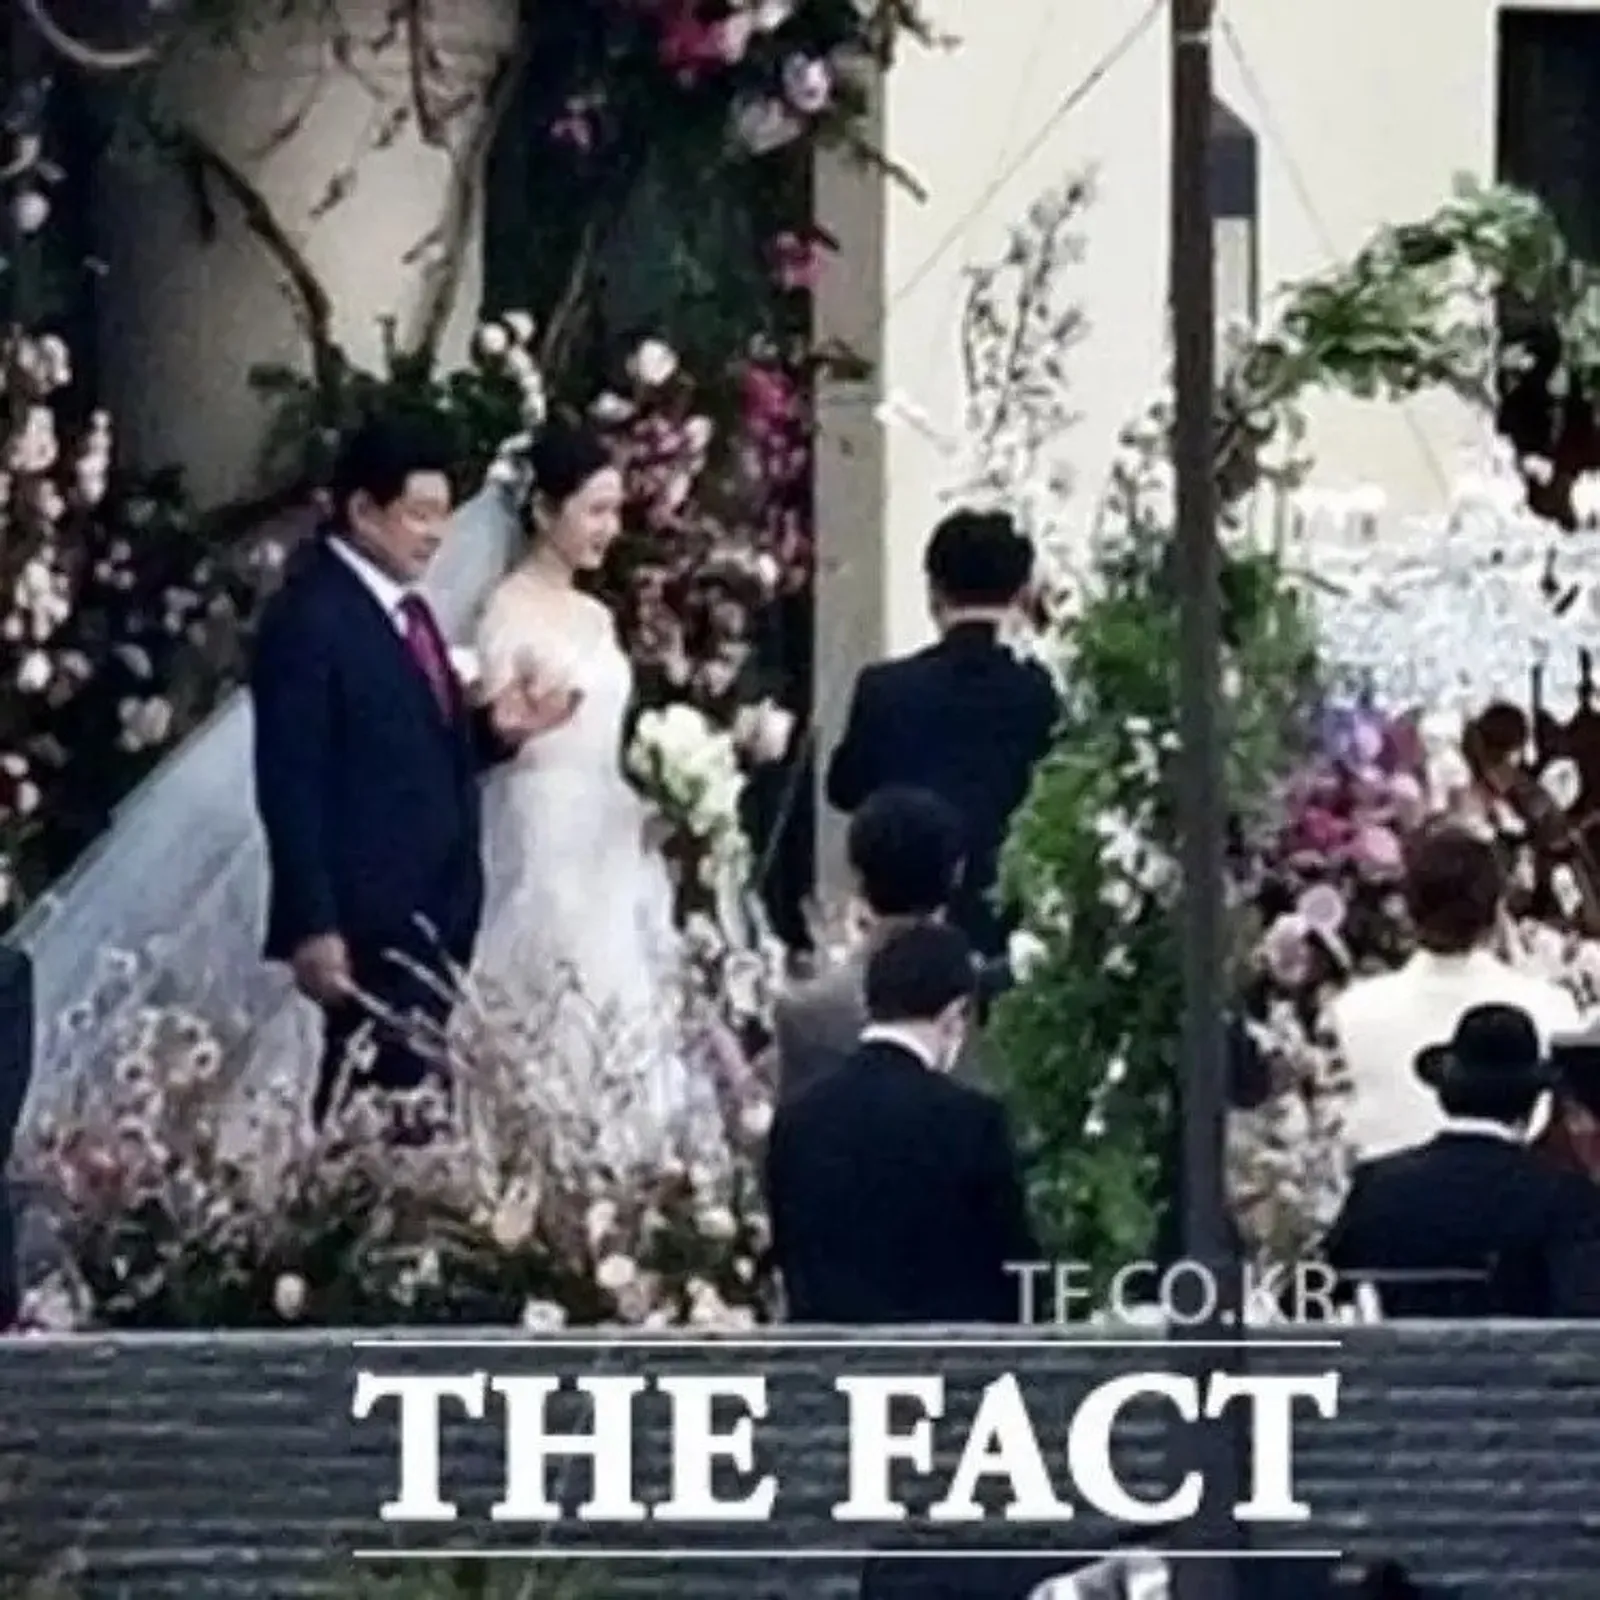 9 Momen Pernikahan Hyun Bin dan Son Ye Jin, Drama Korea Jadi Nyata!